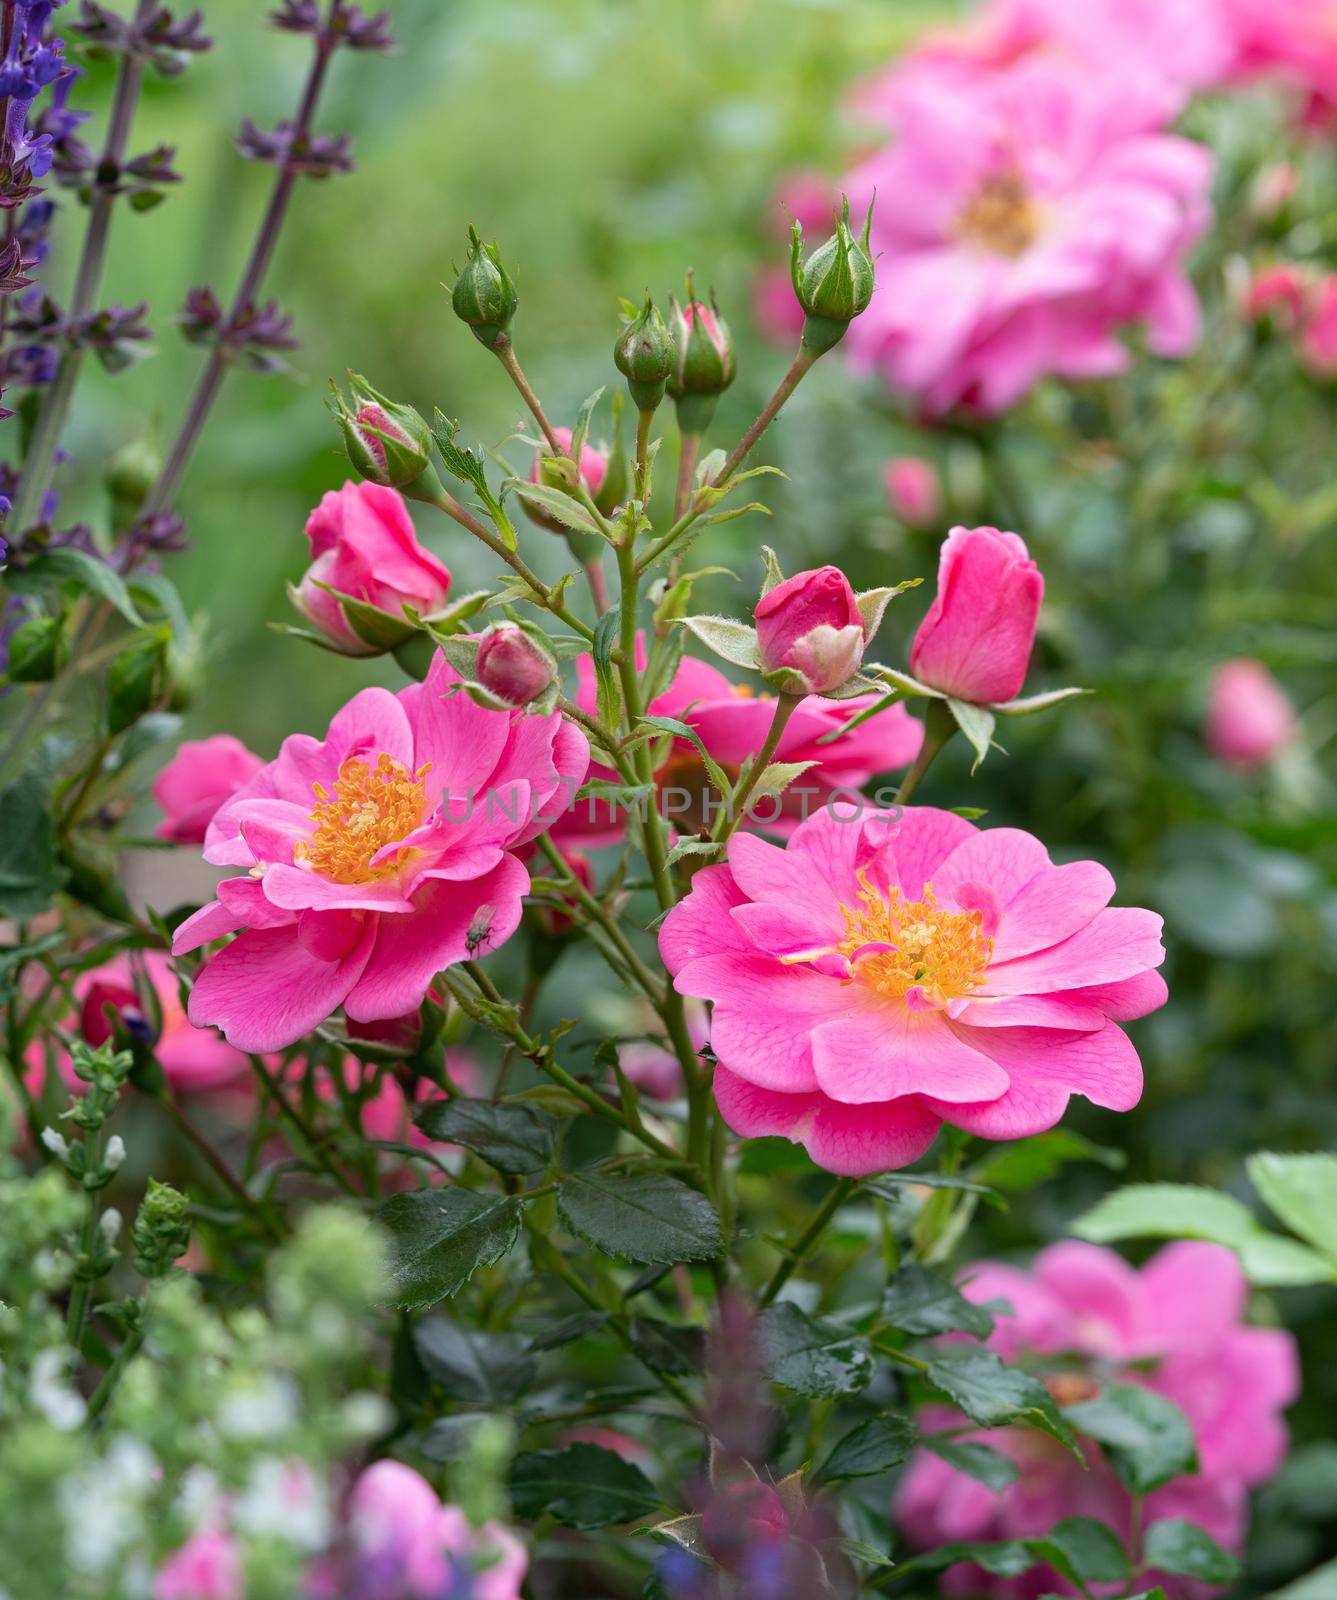 Dwarf rose, Rosa patio by alfotokunst